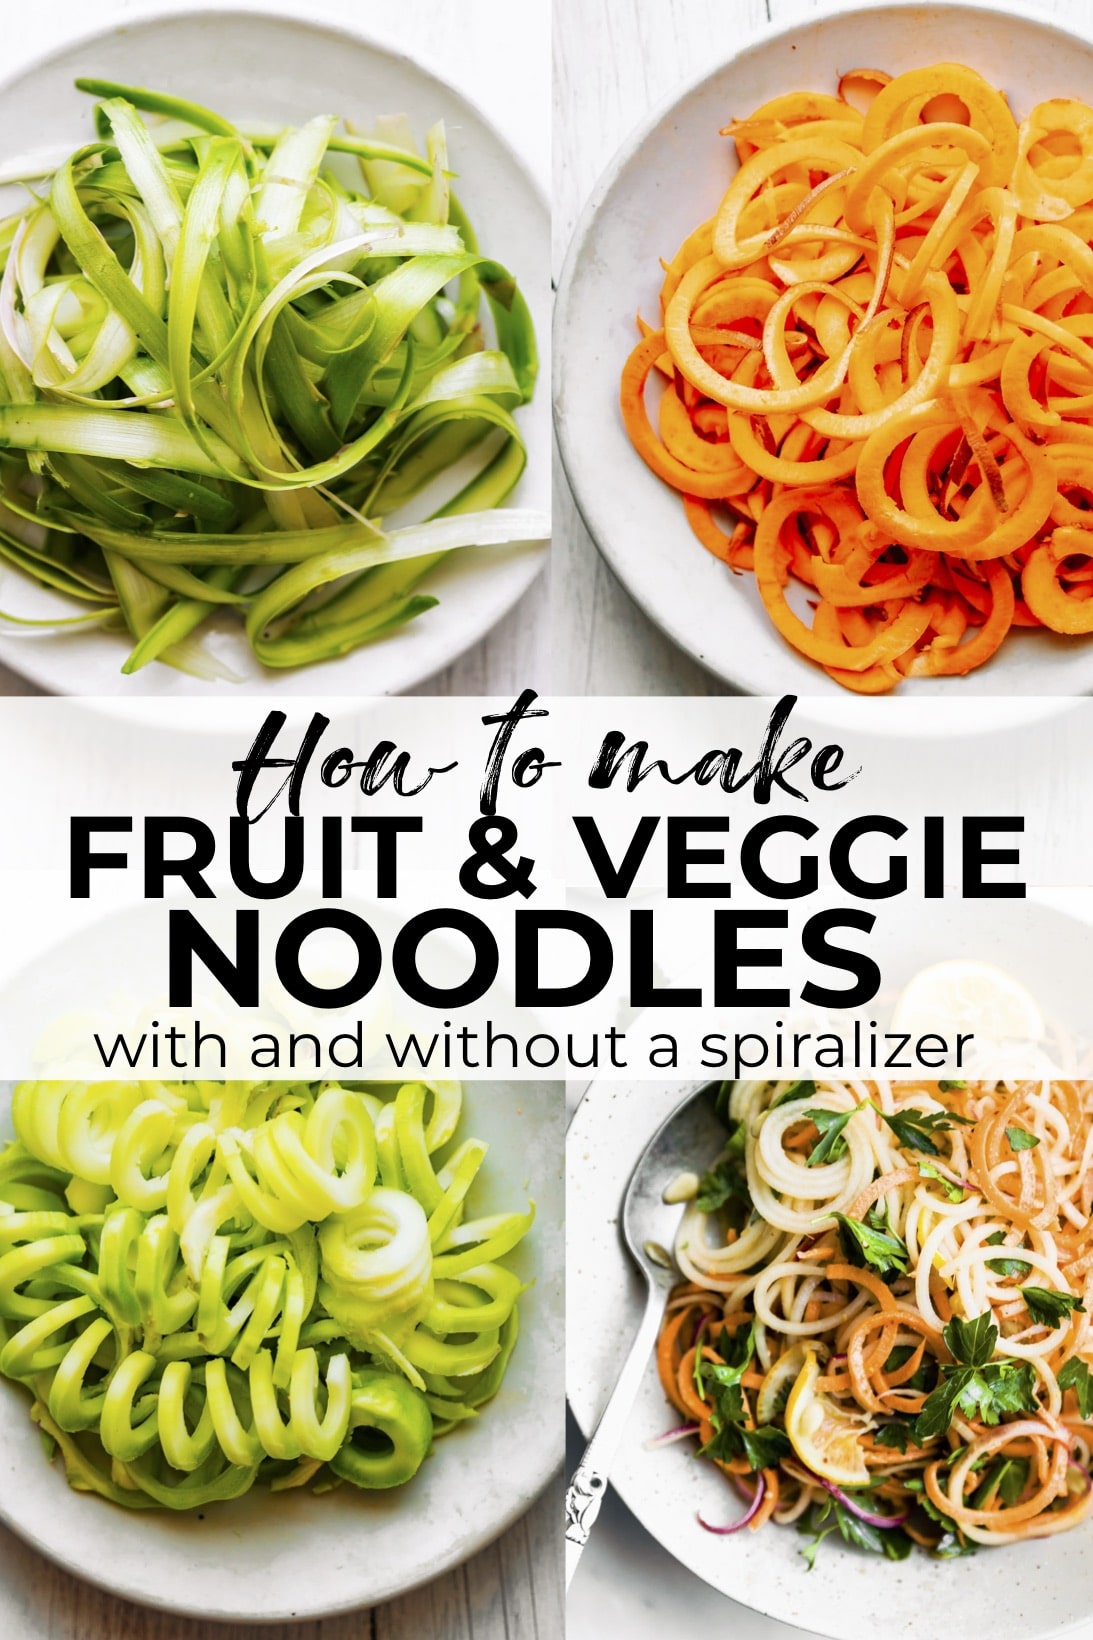 veggie noodles on plates